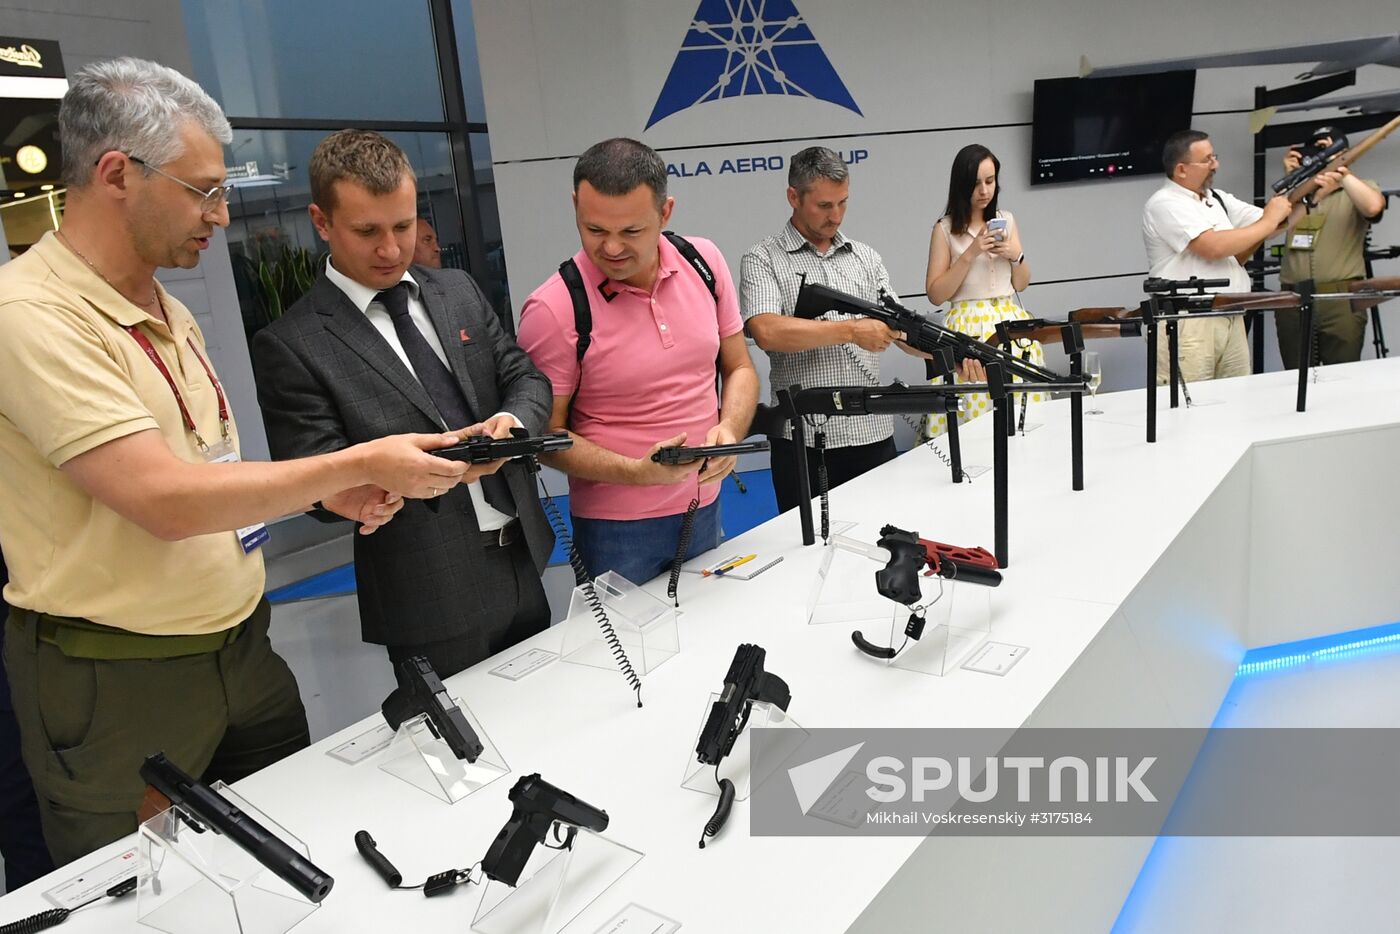 Kalashnikov Concern presents new inventions during Army 2017 Forum